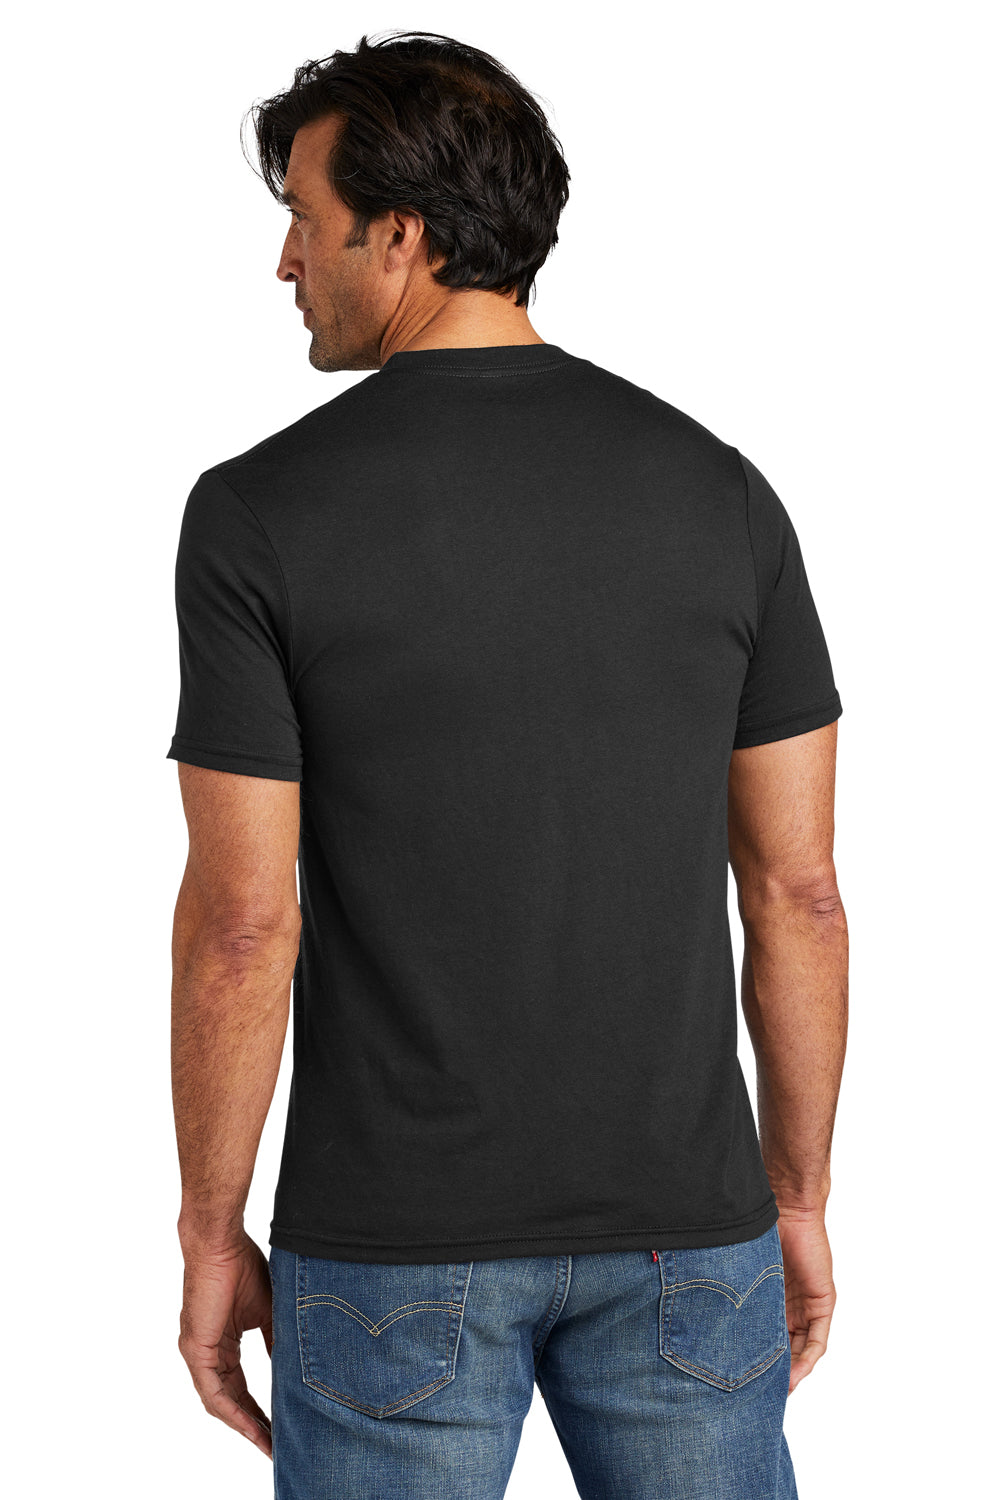 Volunteer Knitwear VL40 Short Sleeve Crewneck T-Shirt Black Back